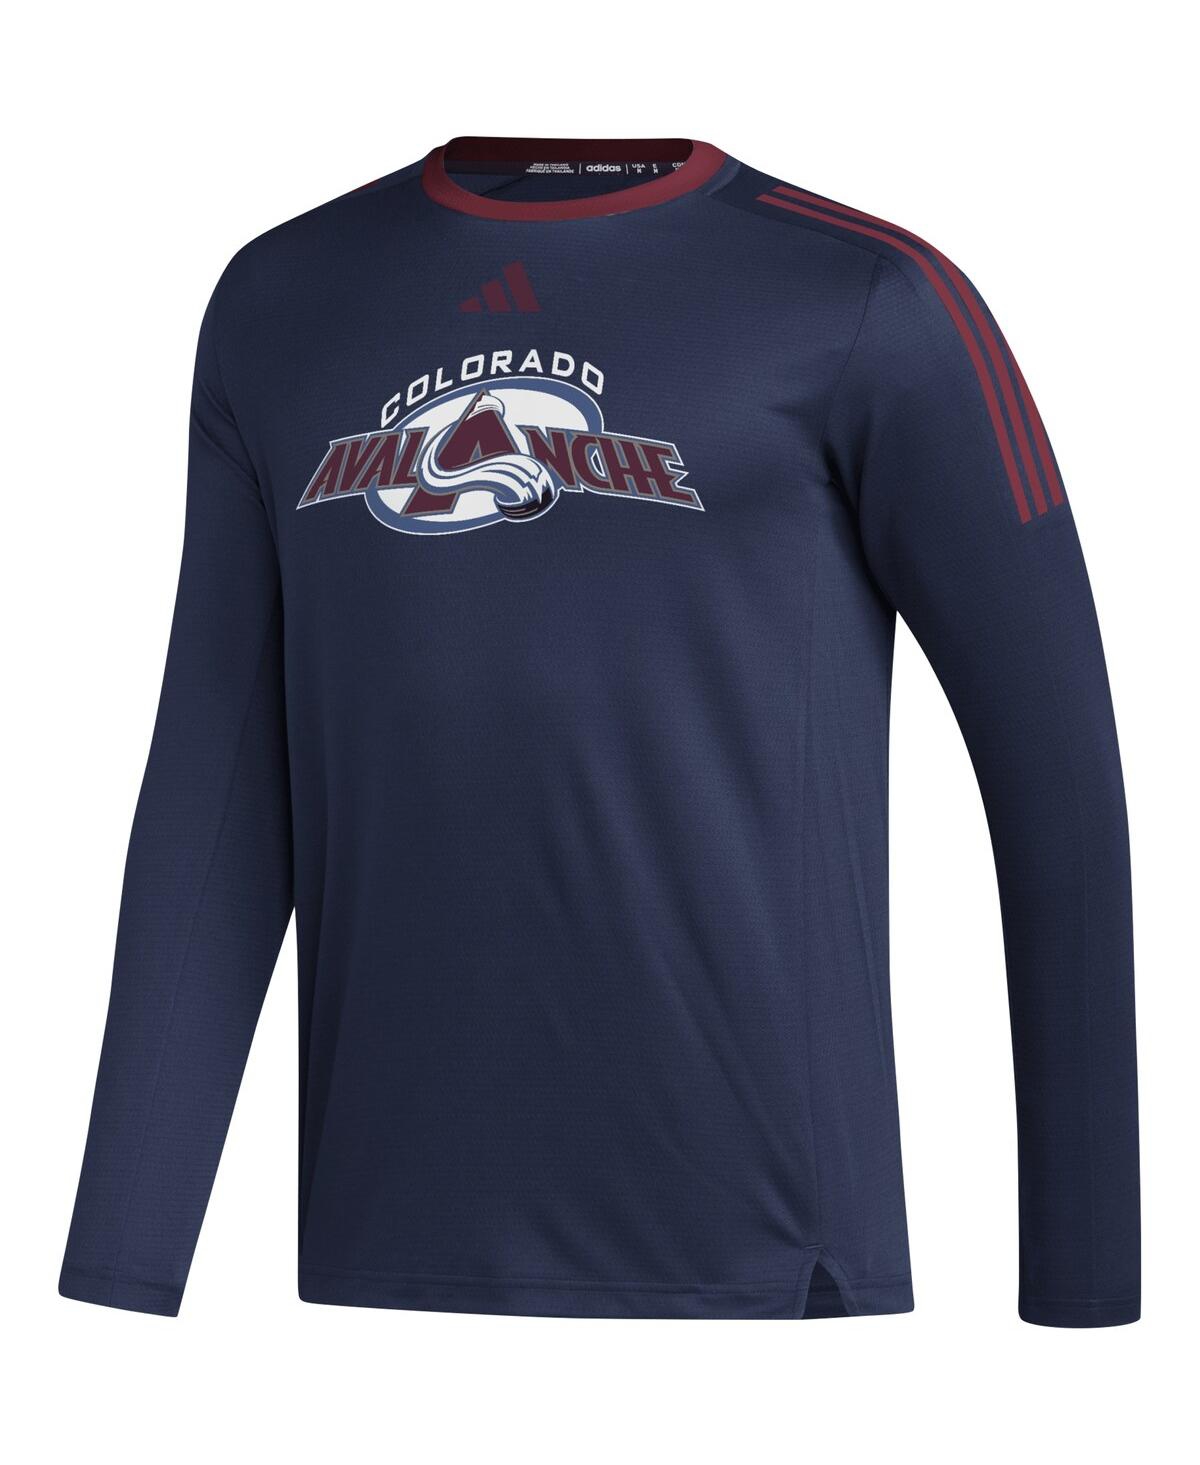 Shop Adidas Originals Men's Adidas Navy Colorado Avalanche Aeroready Long Sleeve T-shirt